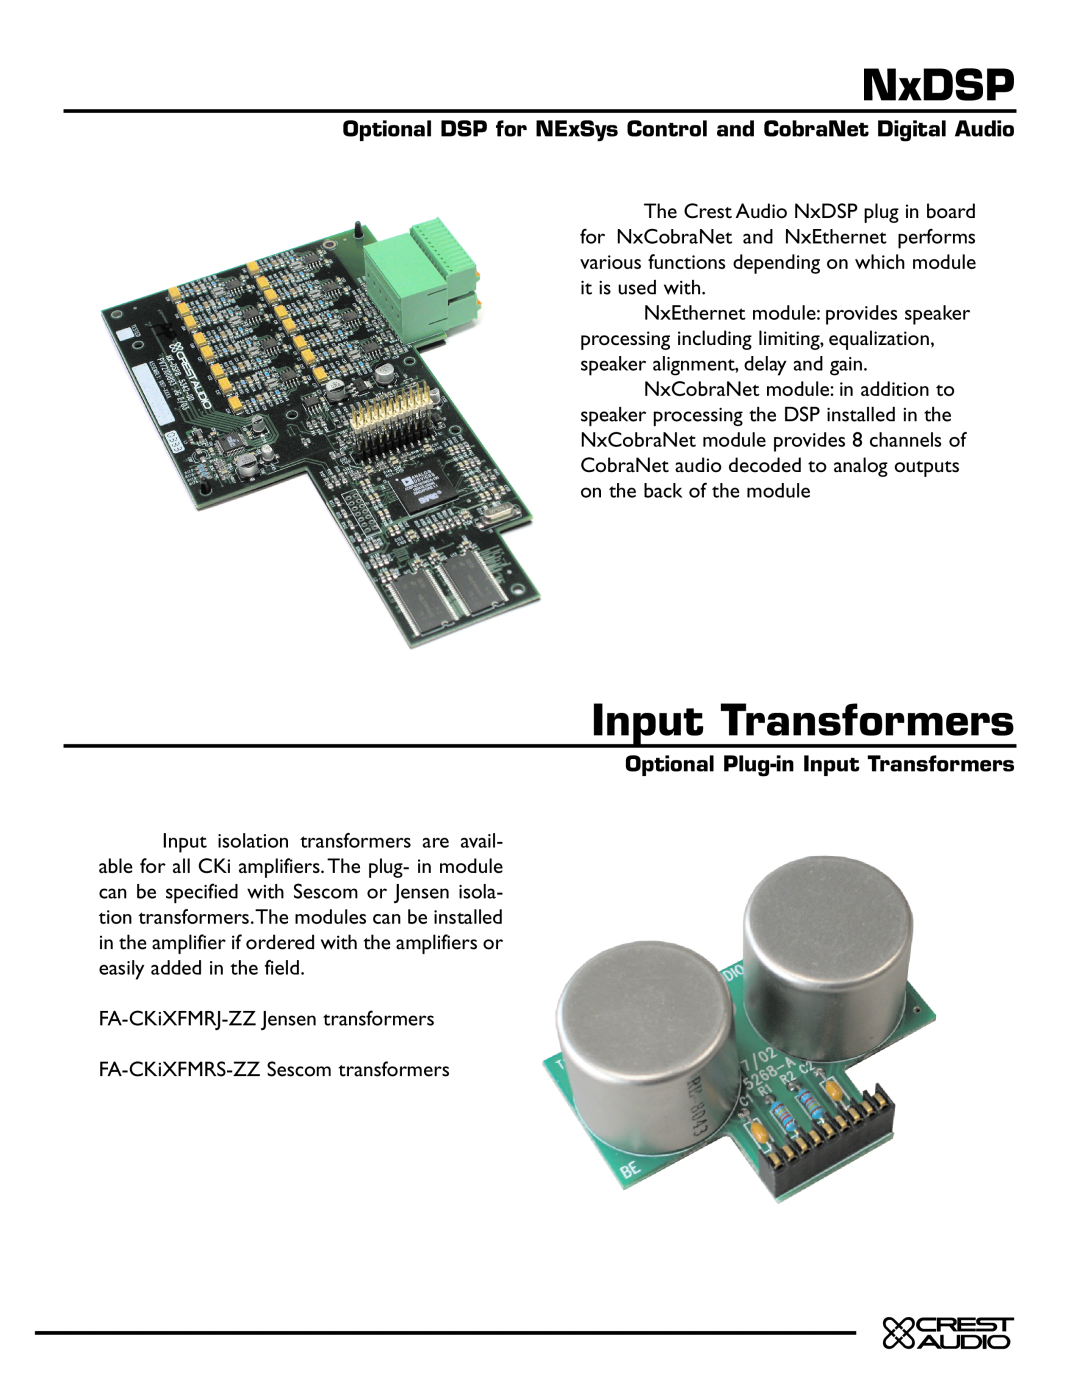 Crest Audio CKi Series manual NxDSP, Optional Plug-inInput Transformers 